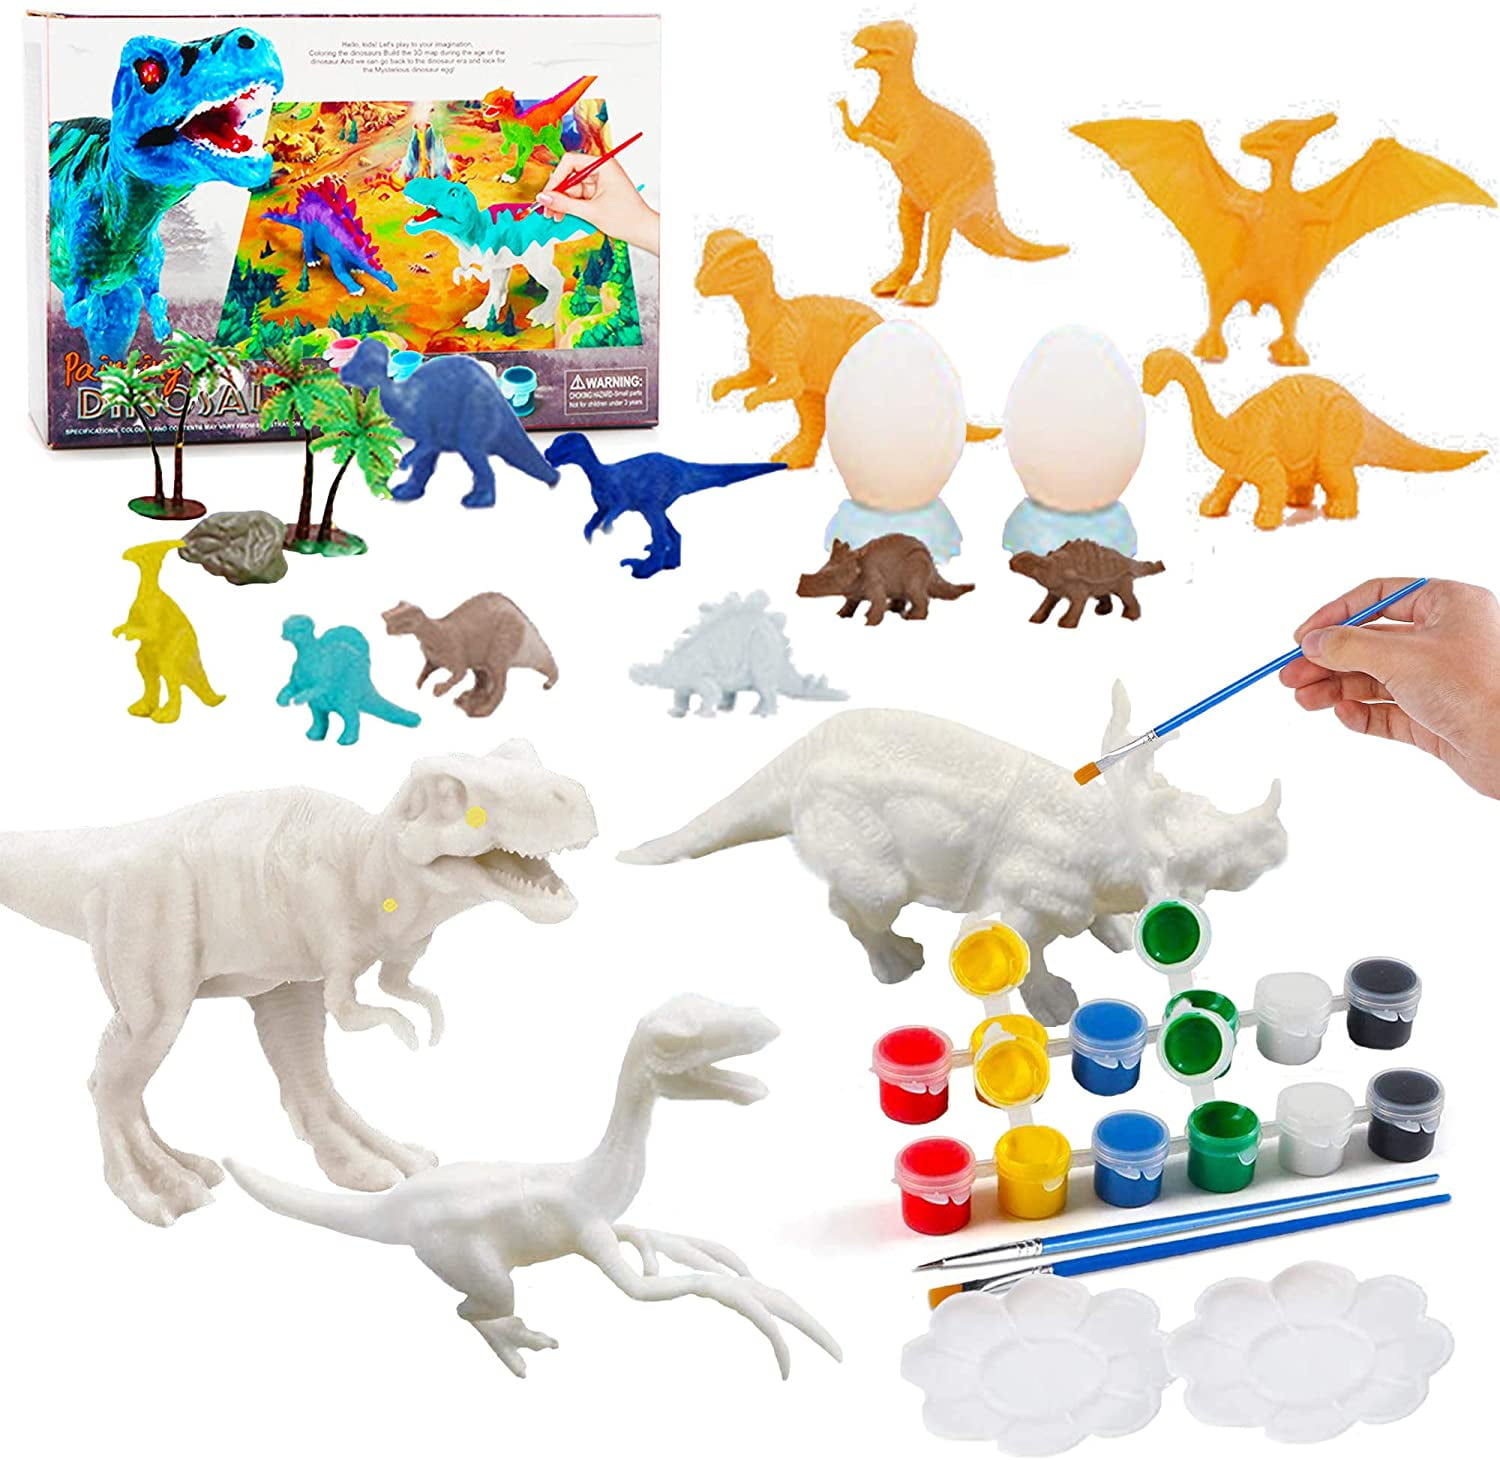 KangoKids Dinosaur Painting Kit for Kids Ages 4-8 with 12 Dinos